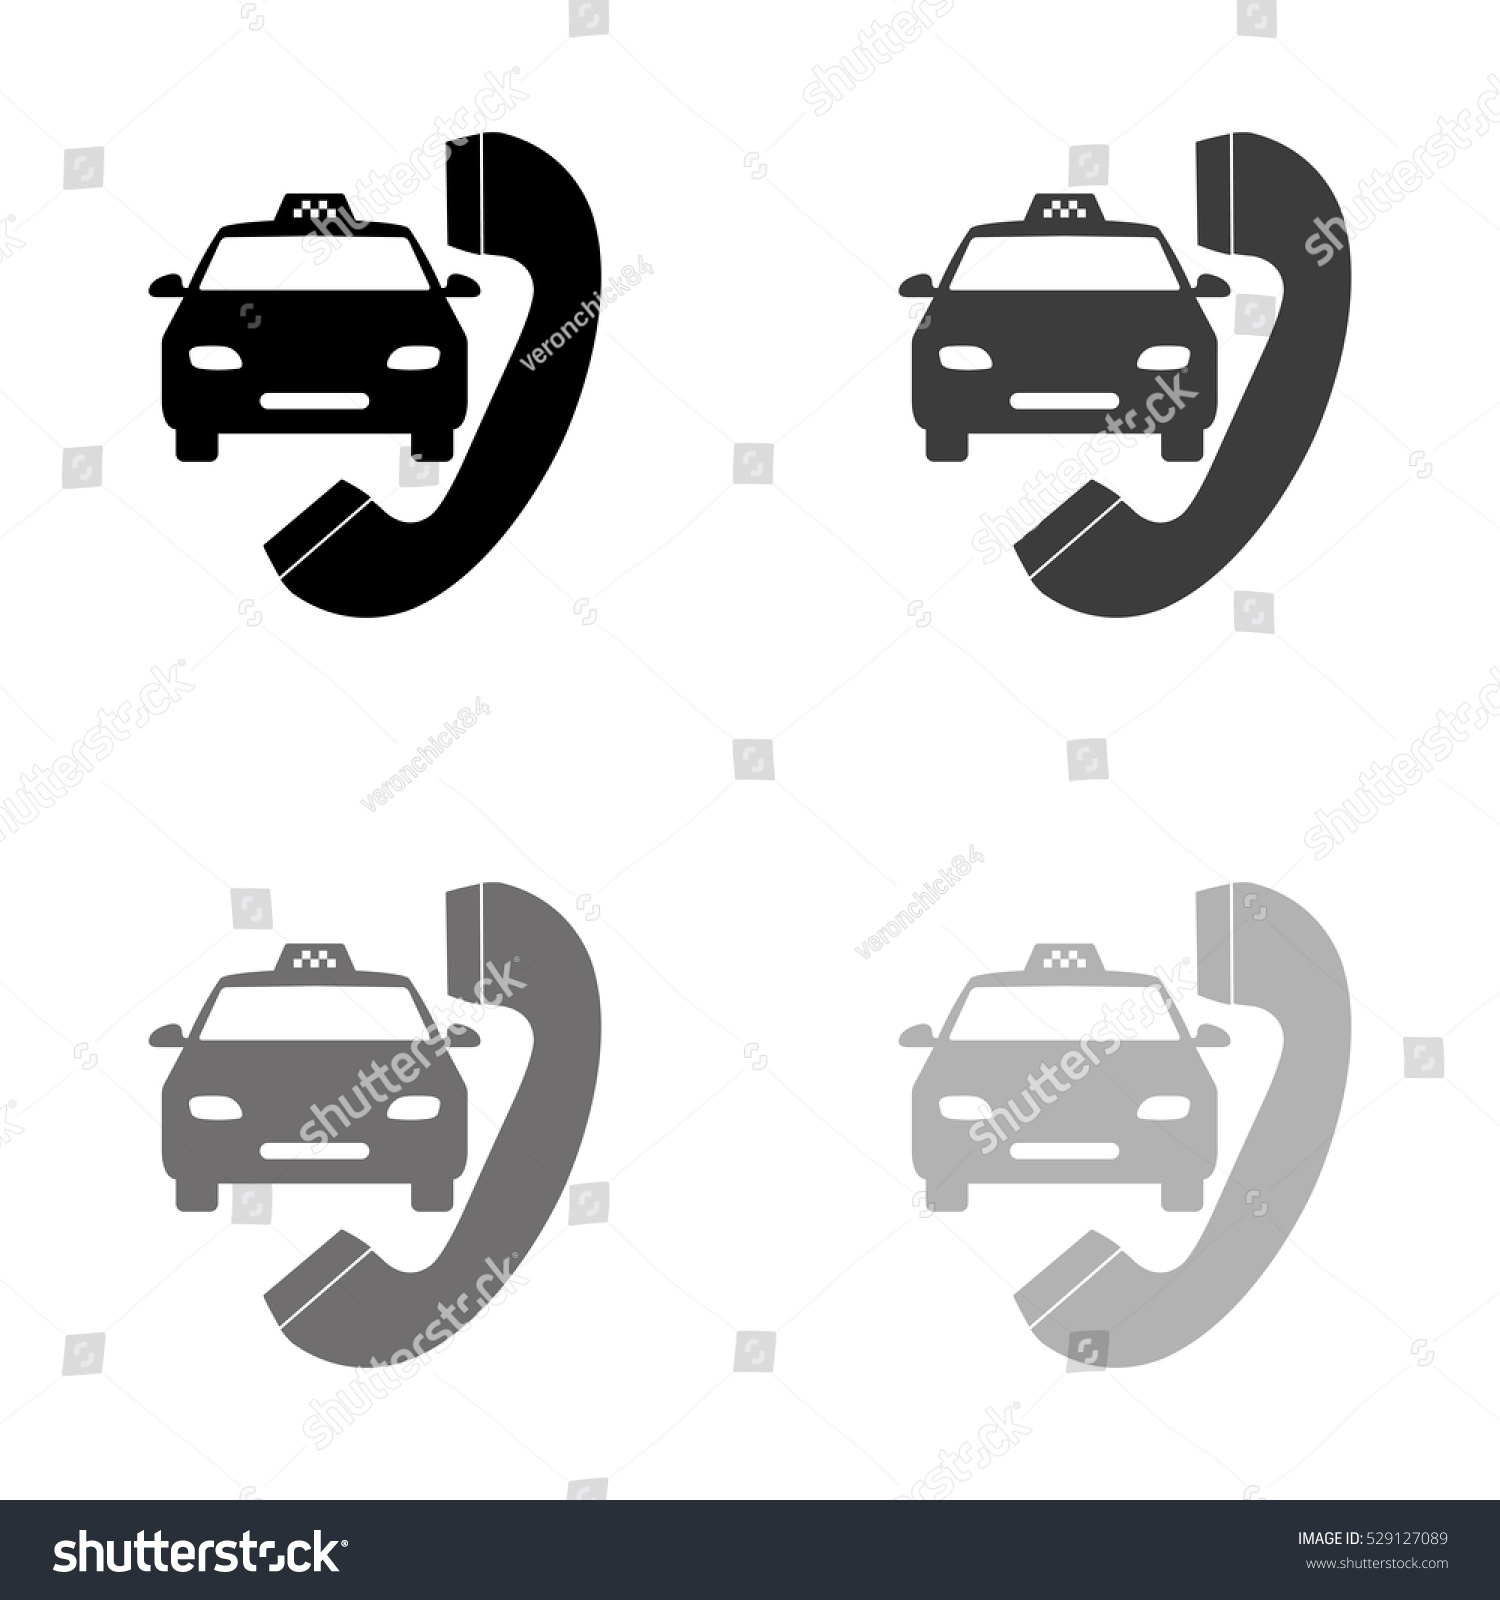 Taxi - Black Vector Icon - 529127089 : Shutterstock